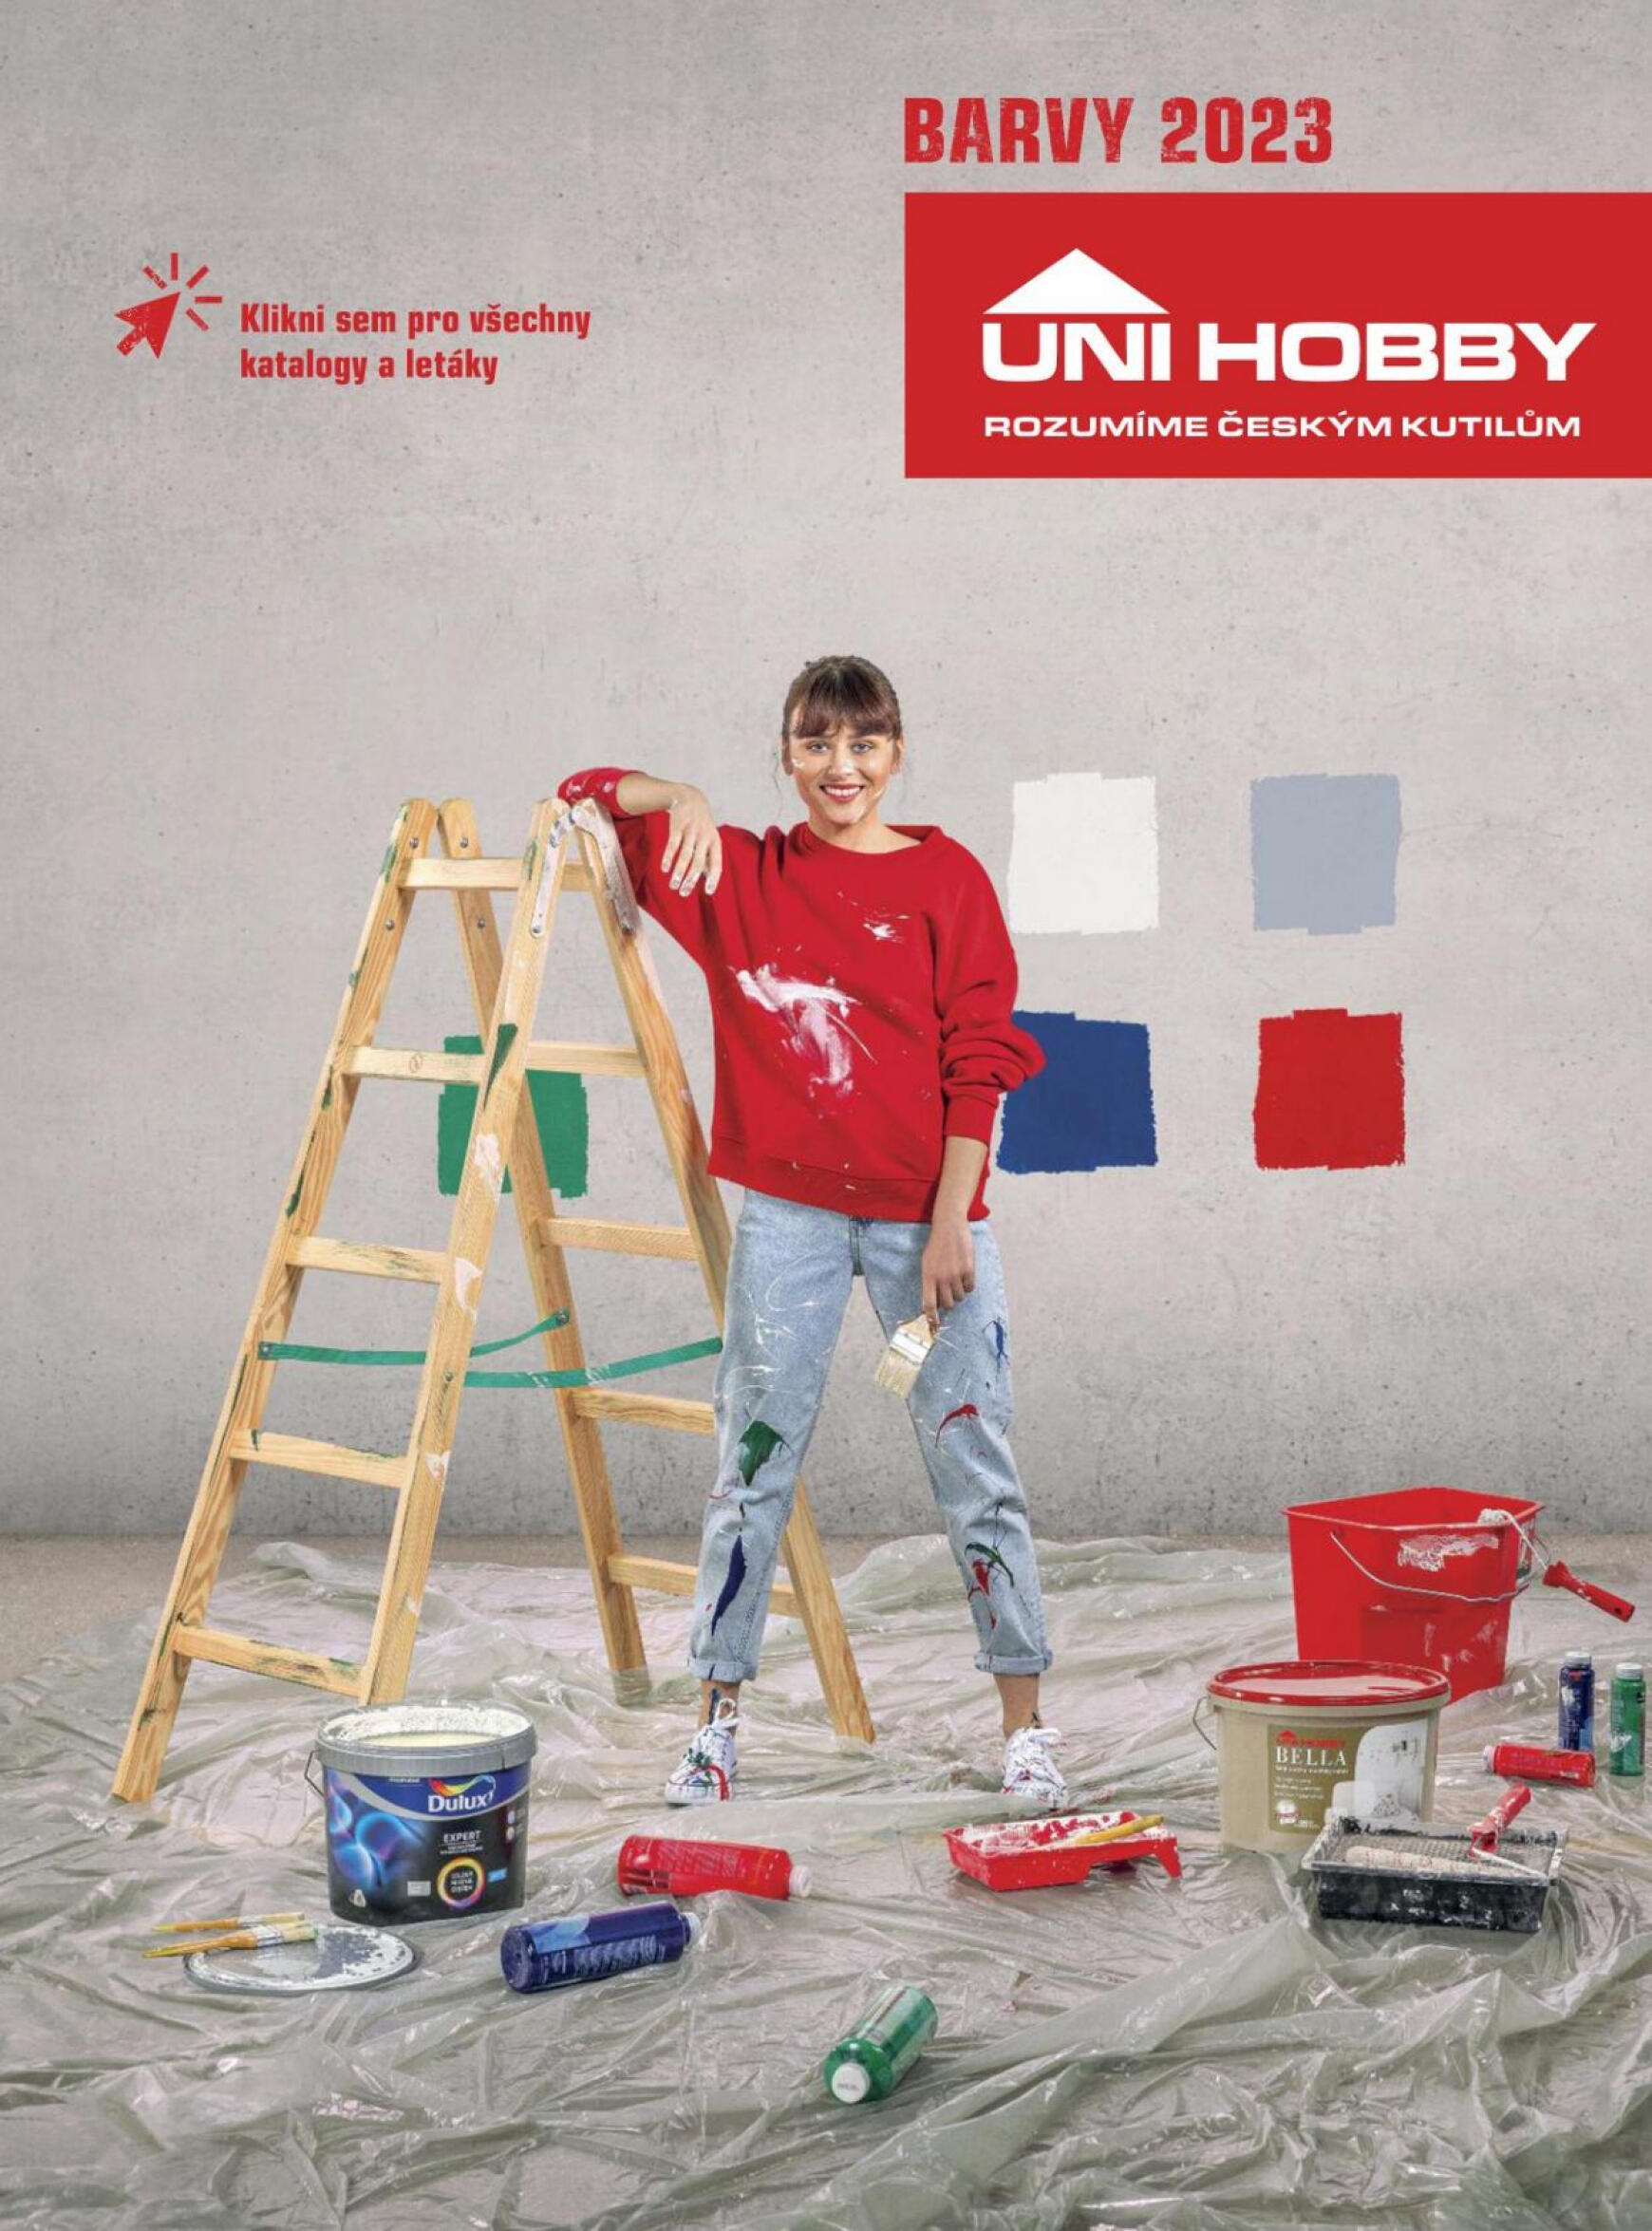 uni-hobby - UNI HOBBY Katalog barev 2023 platný od 22.05.2023